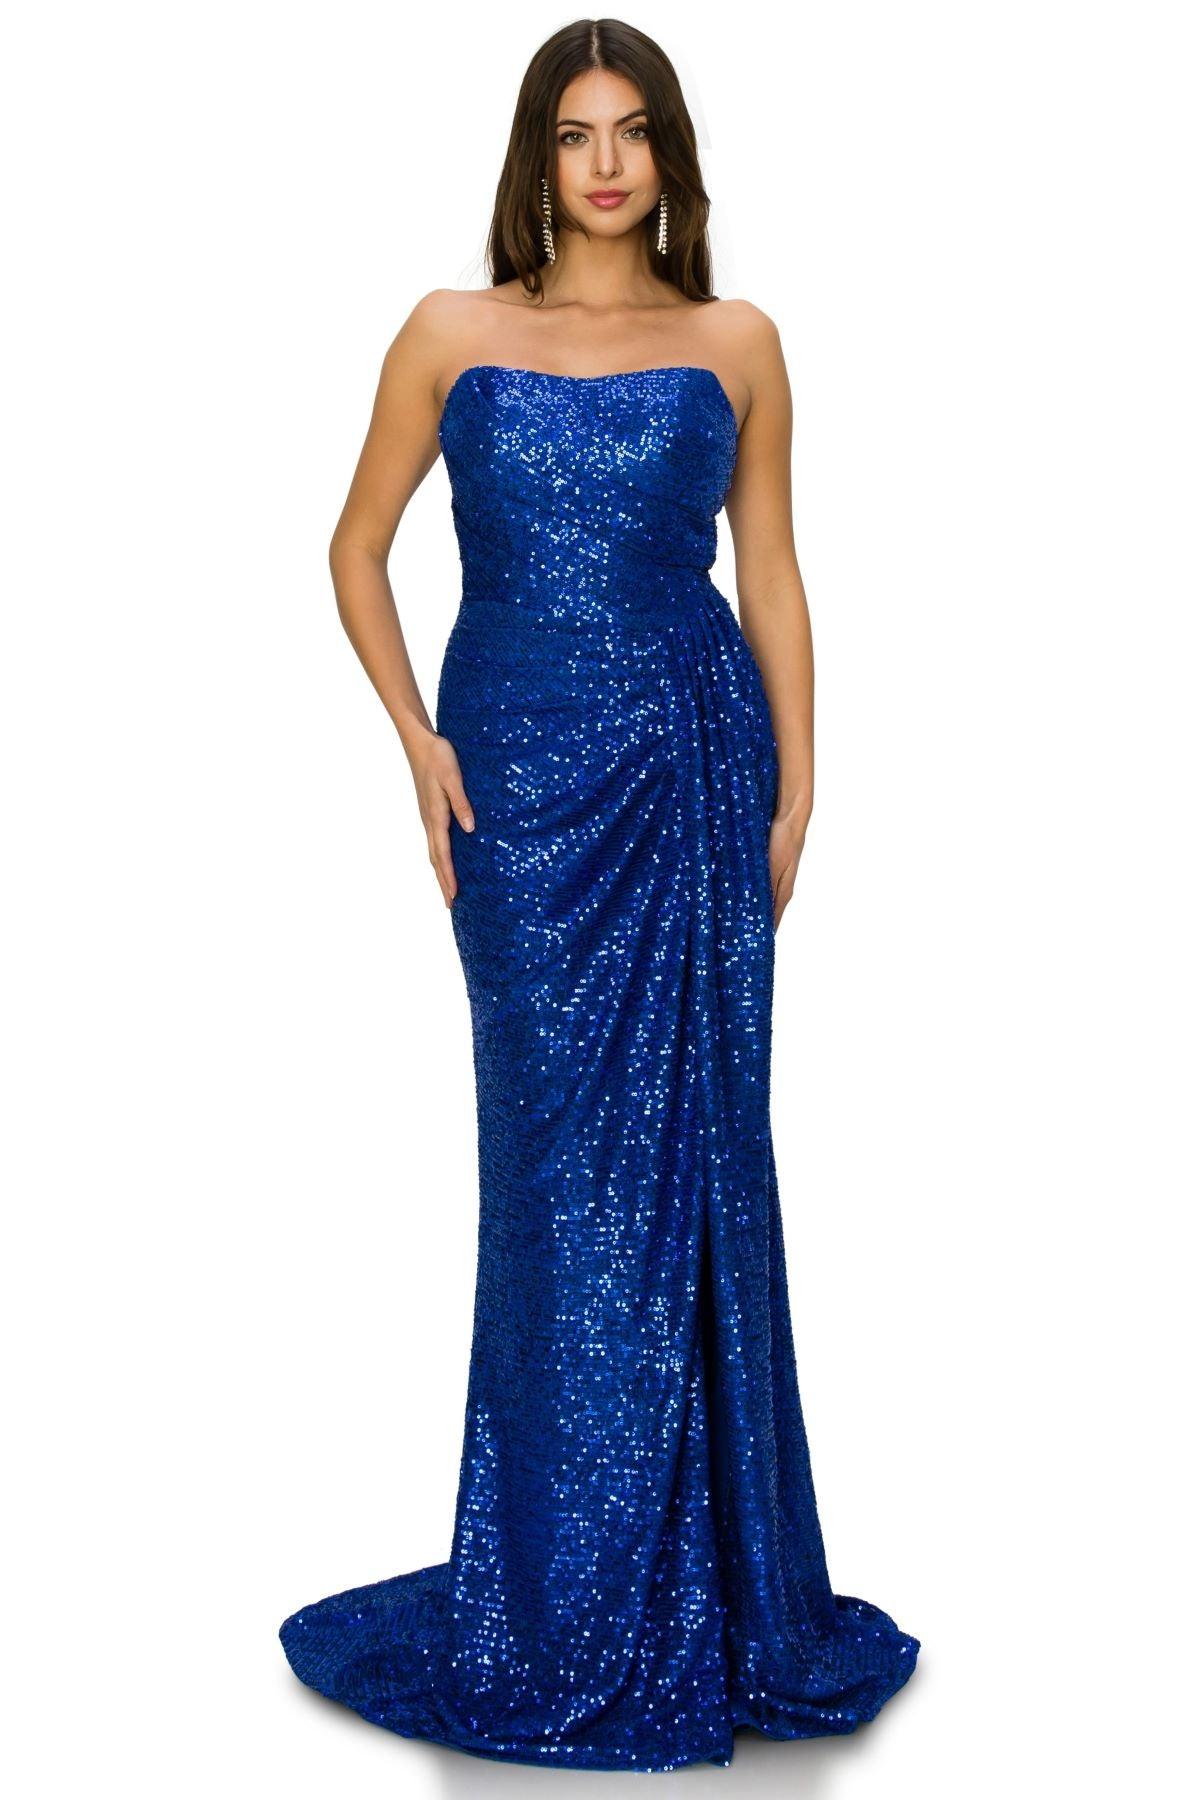 Cinderella Couture CC8052J Strapless Glitter Formal Dress Royal